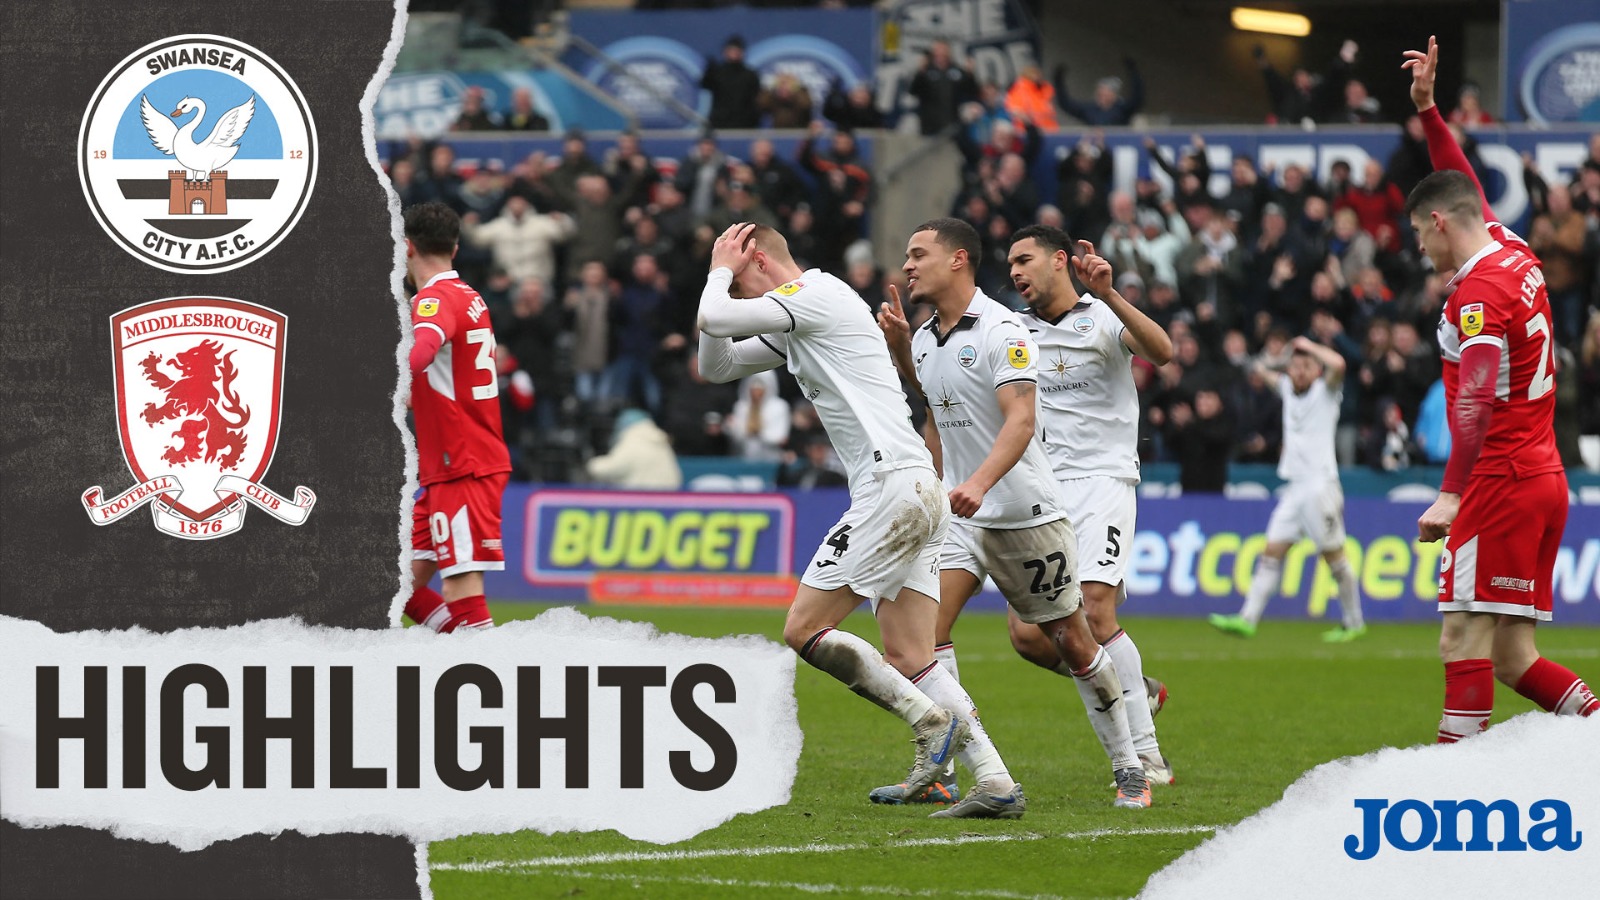 Swansea City v Middlesbrough - Highlights